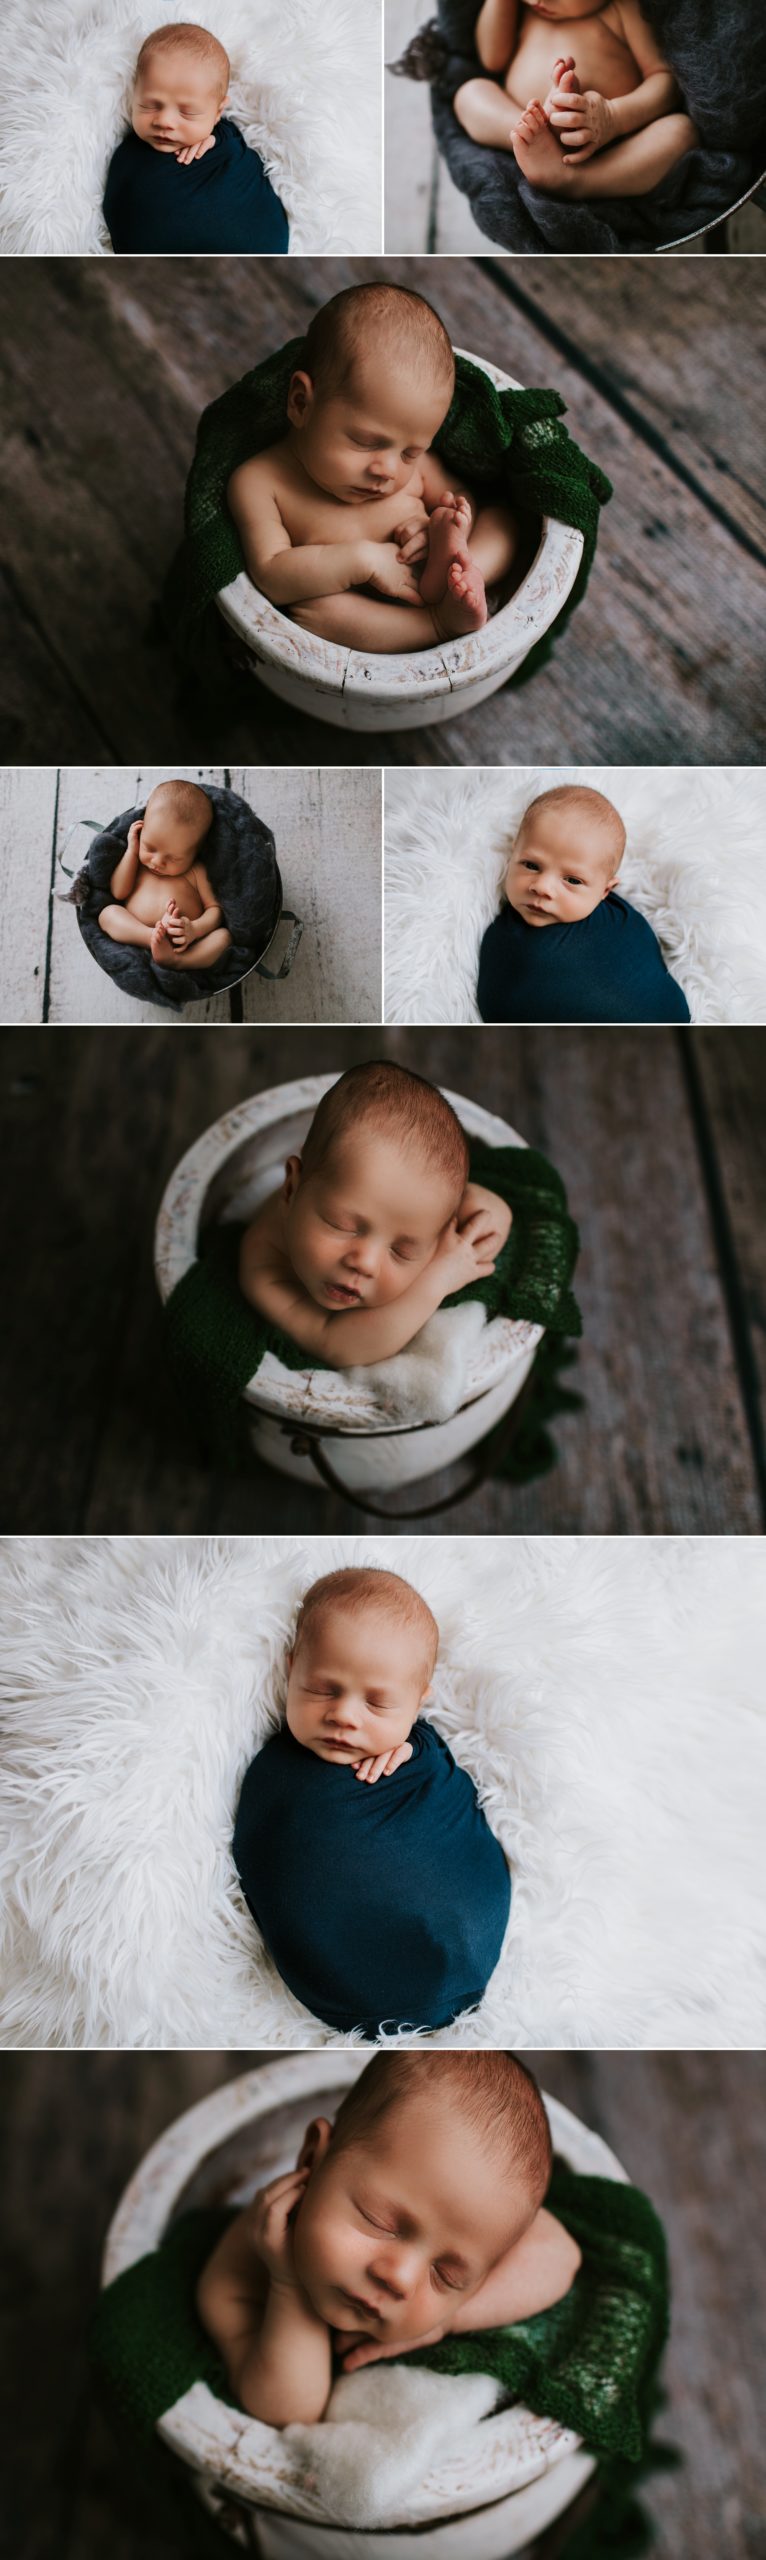 sweet sleepy newborn in a bucket on a rug newborn photographer 63090